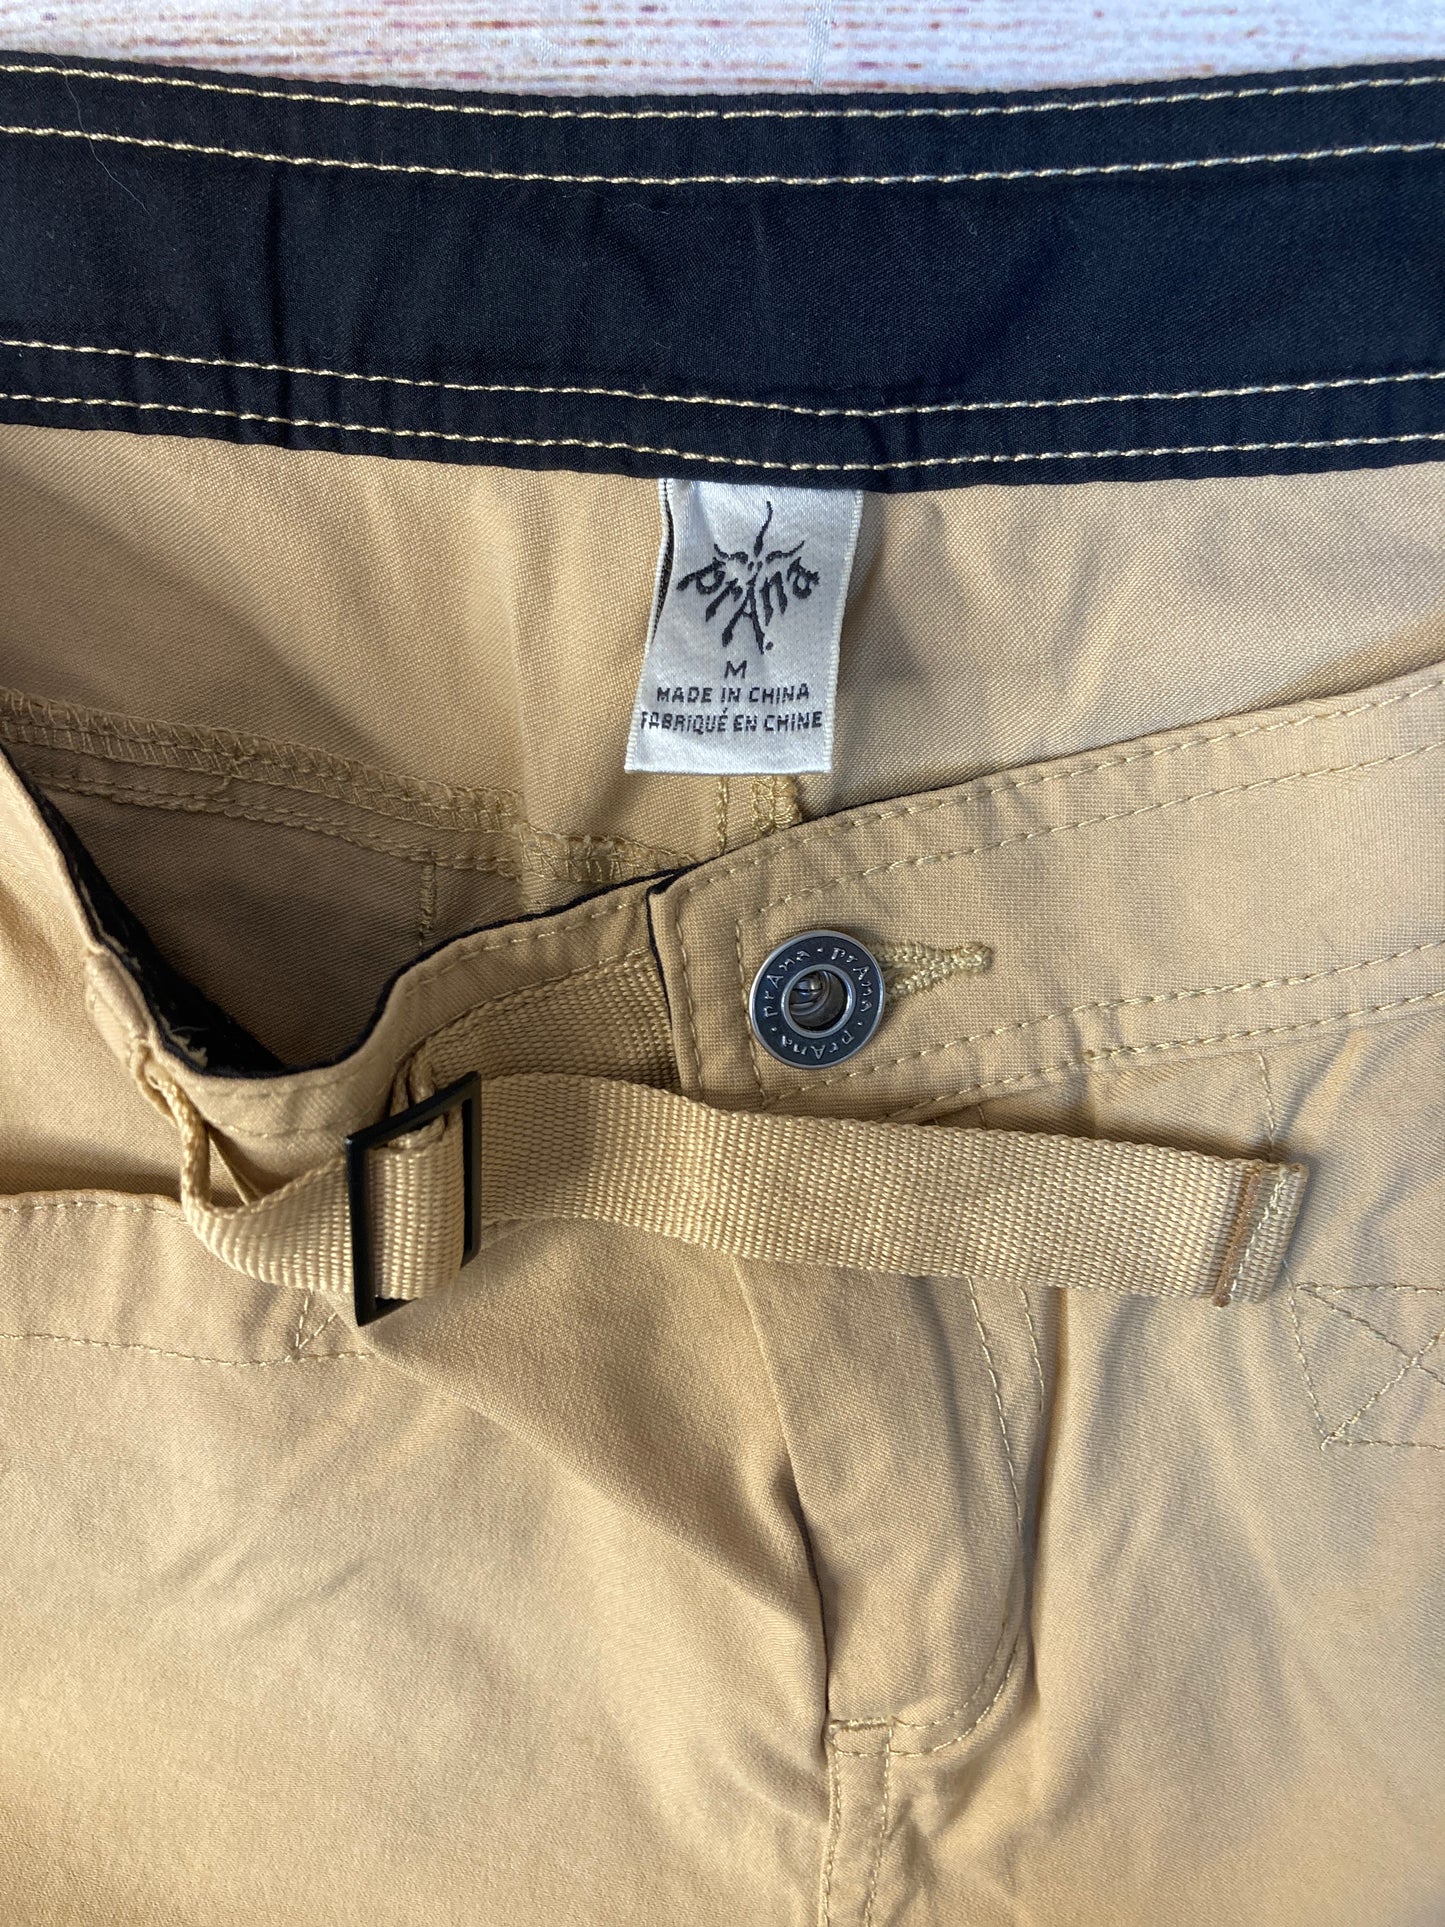 Pants Chinos & Khakis By Prana  Size: M